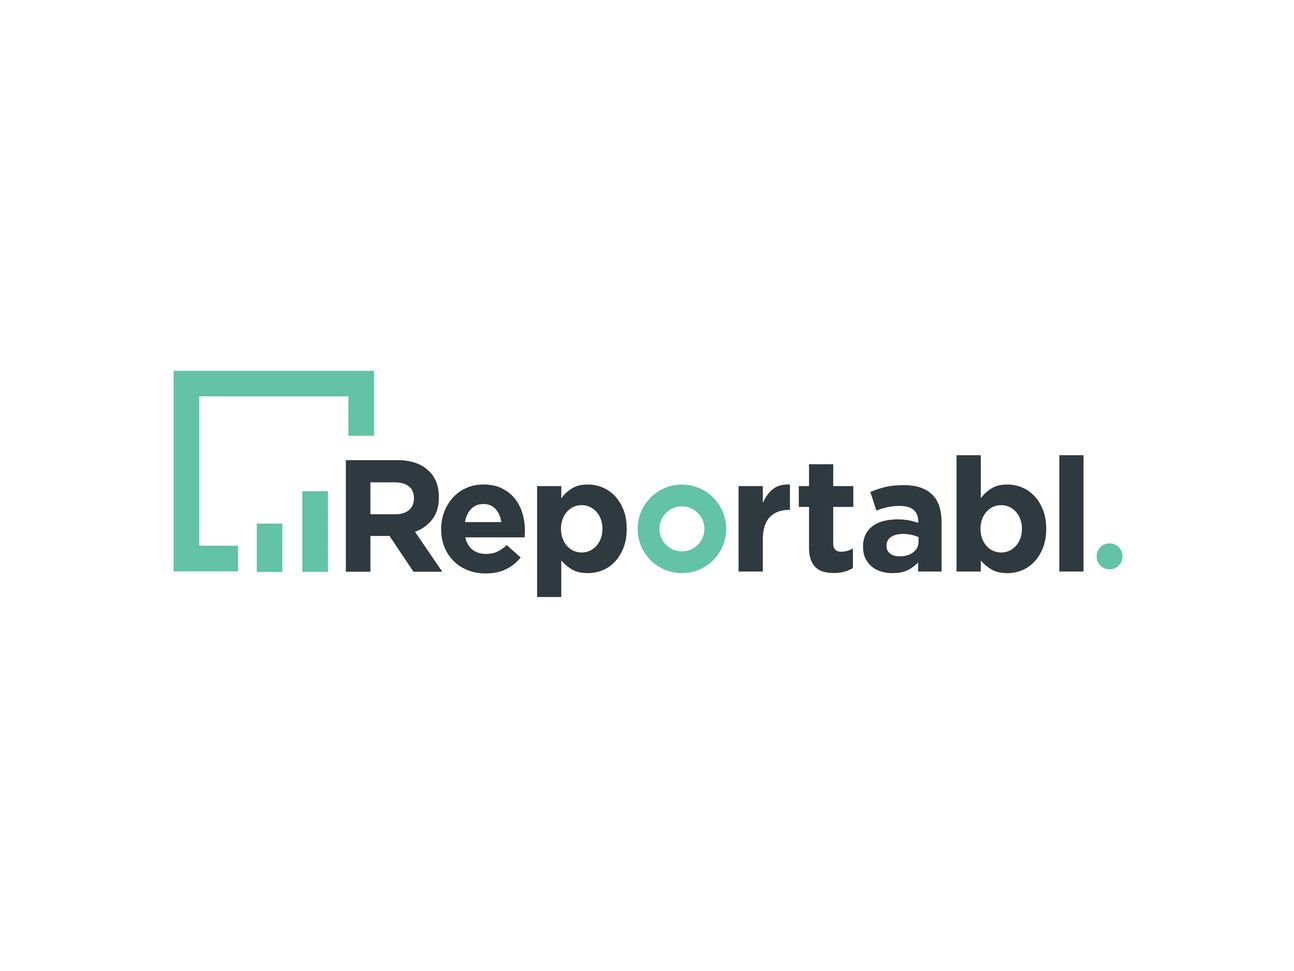 Reportabl. logo